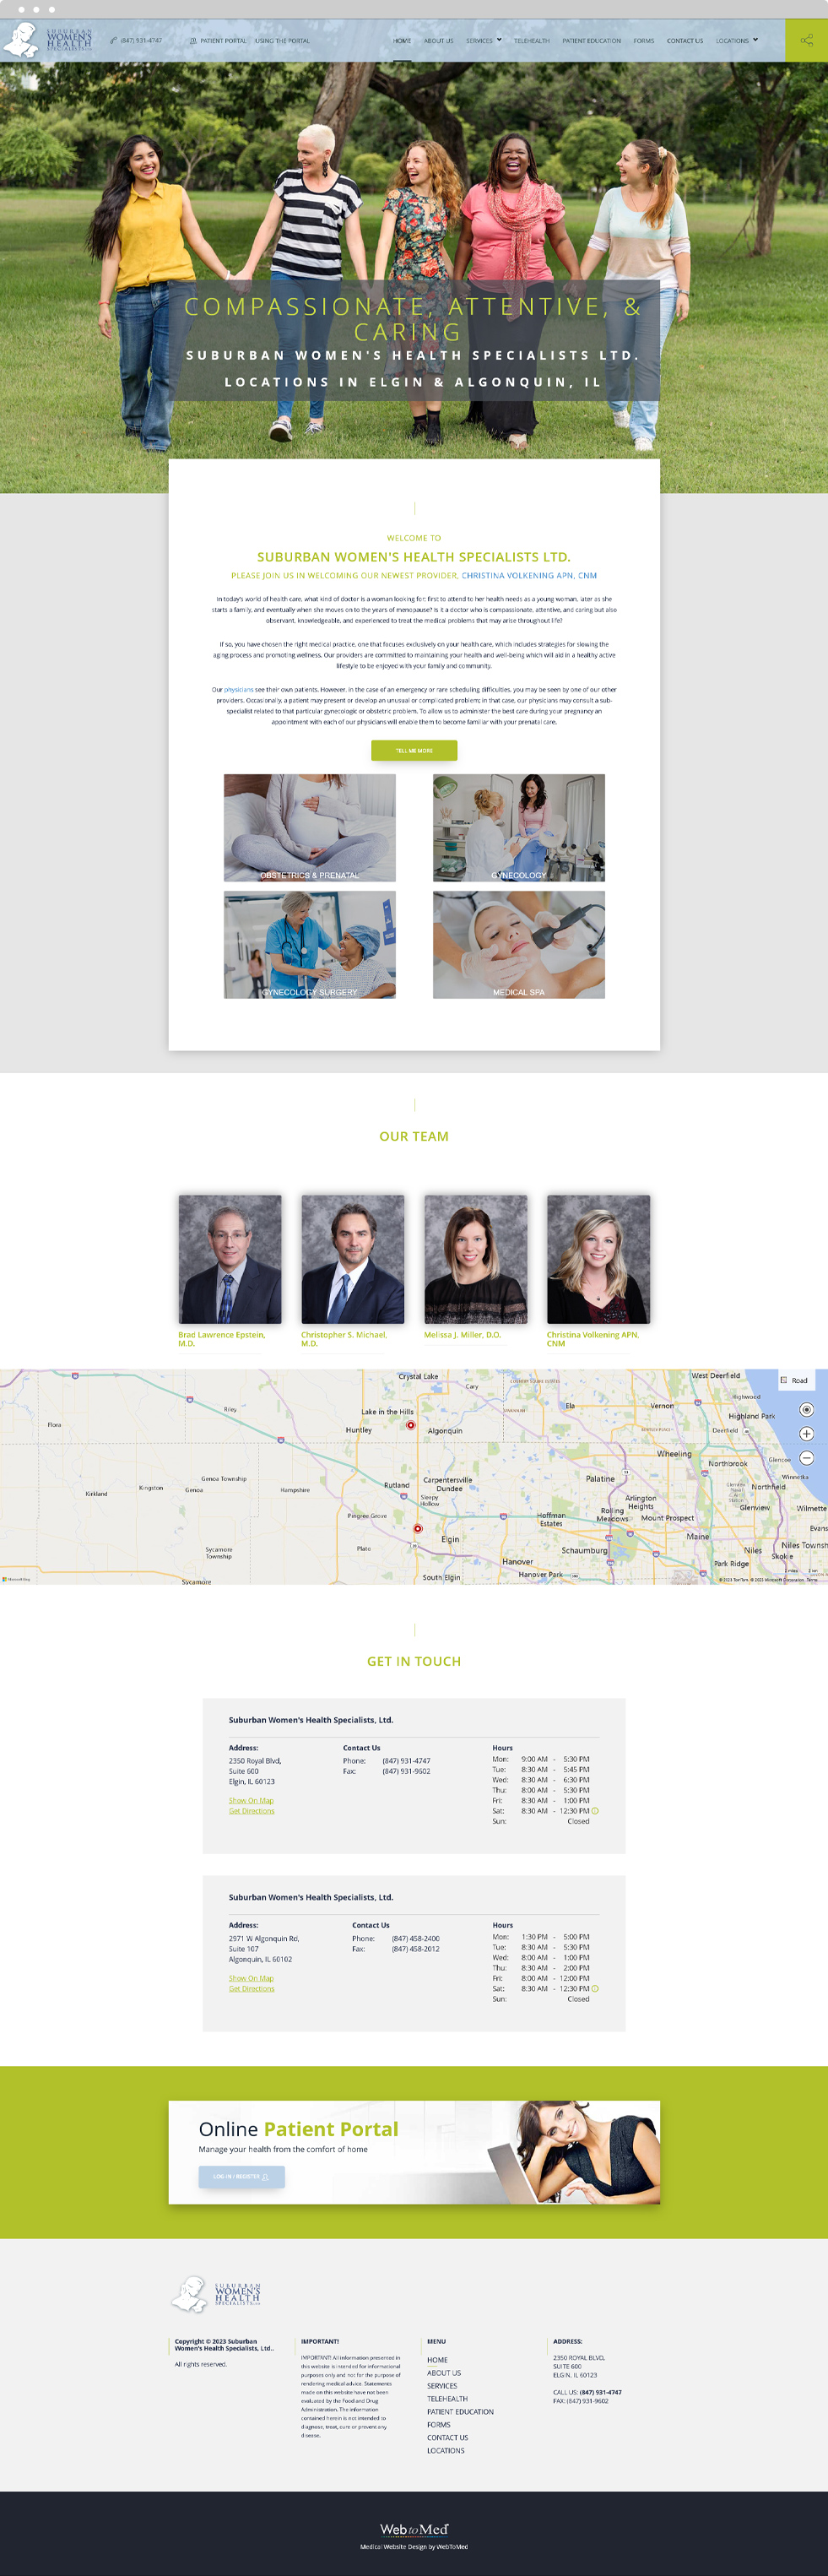 OBGYN Website Design - Suburban Women's Health Specialists Ltd. - Homepage